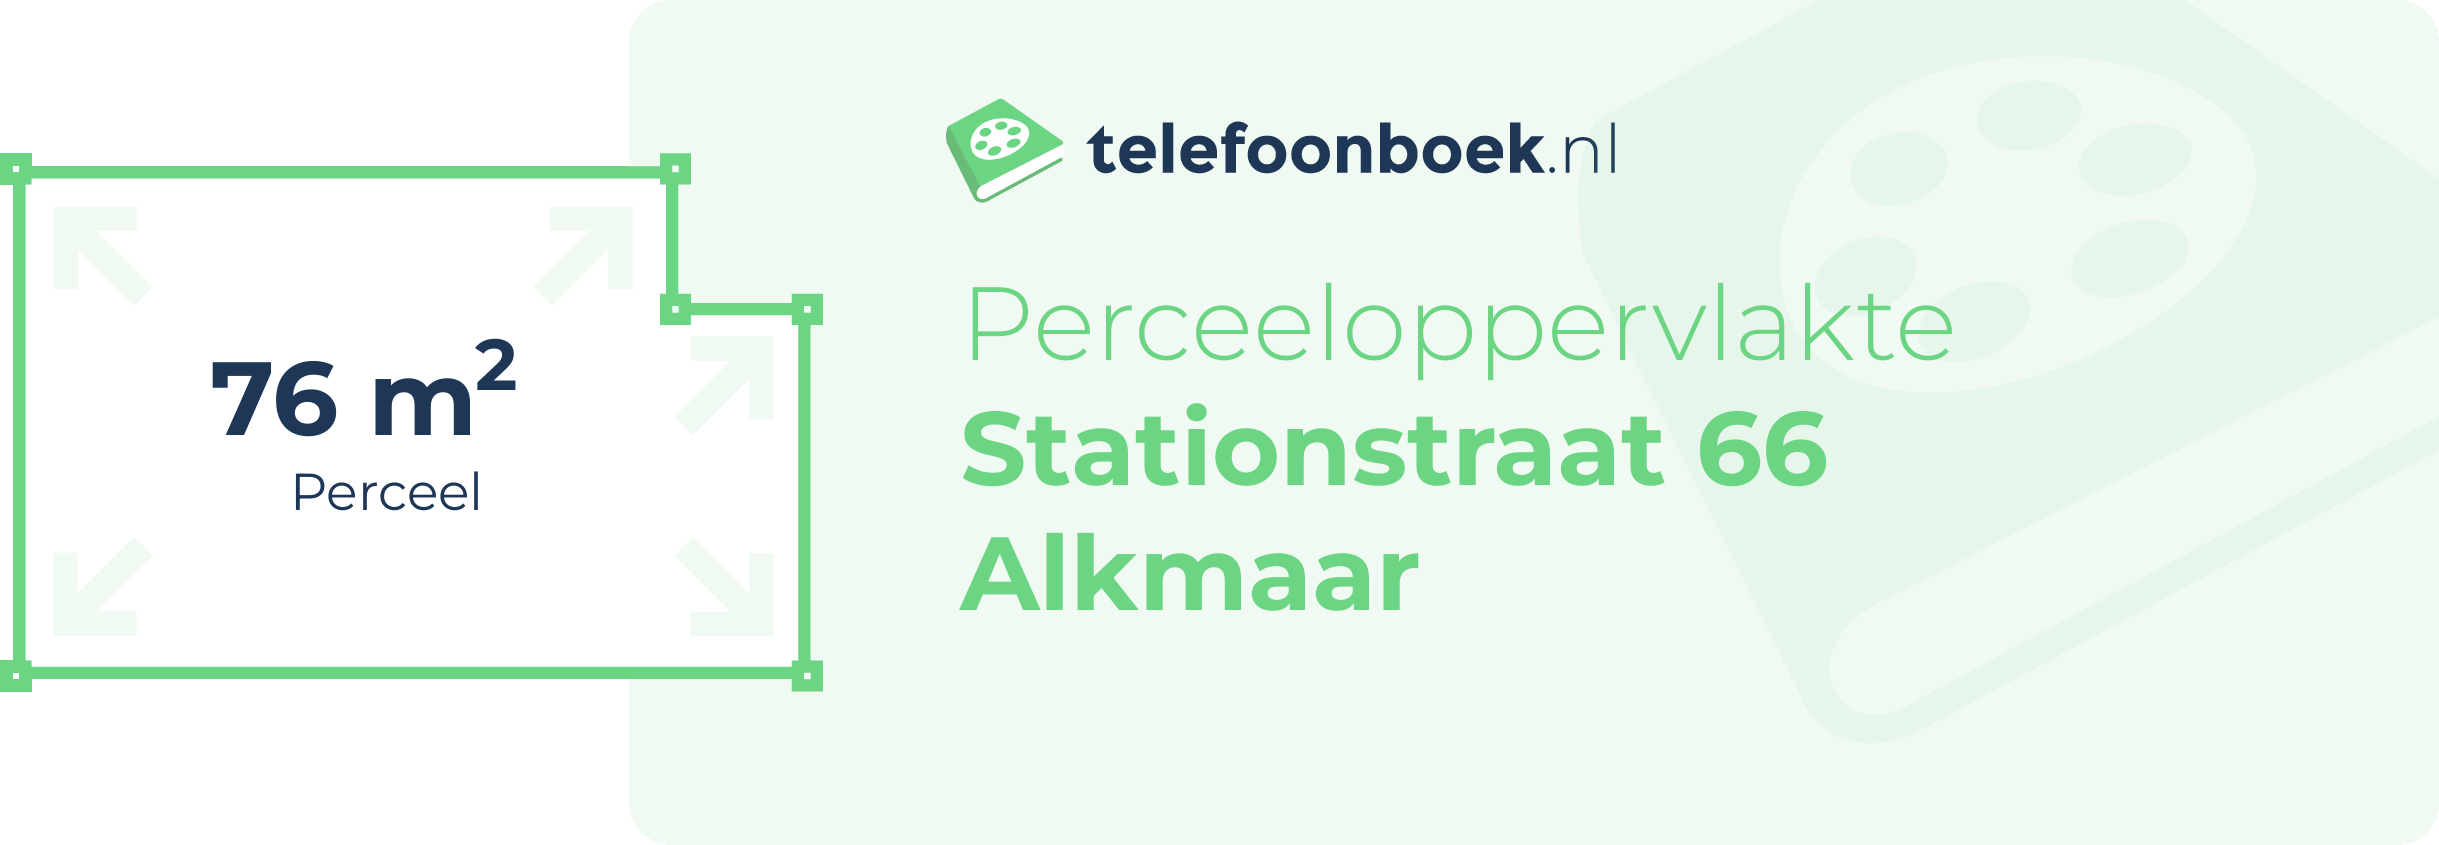 Perceeloppervlakte Stationstraat 66 Alkmaar